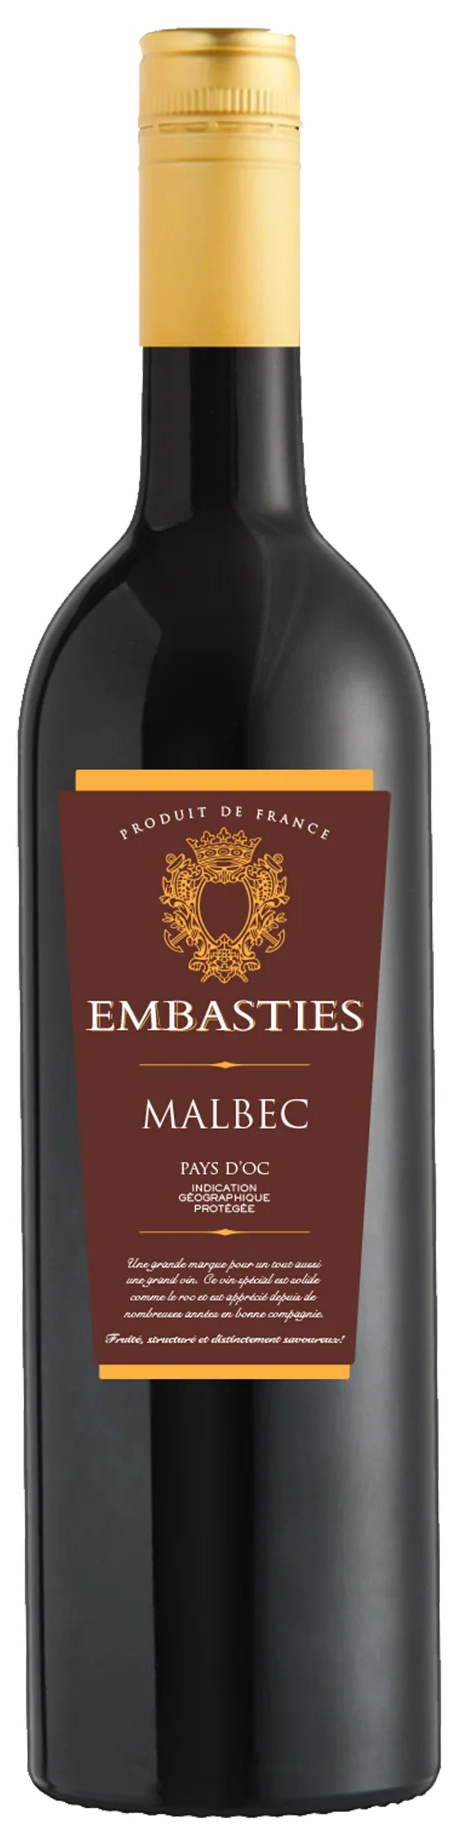 Embasties Malbec IGP - wijn Faberwineworld rode Pays Faberwineworld | d\'Oc 